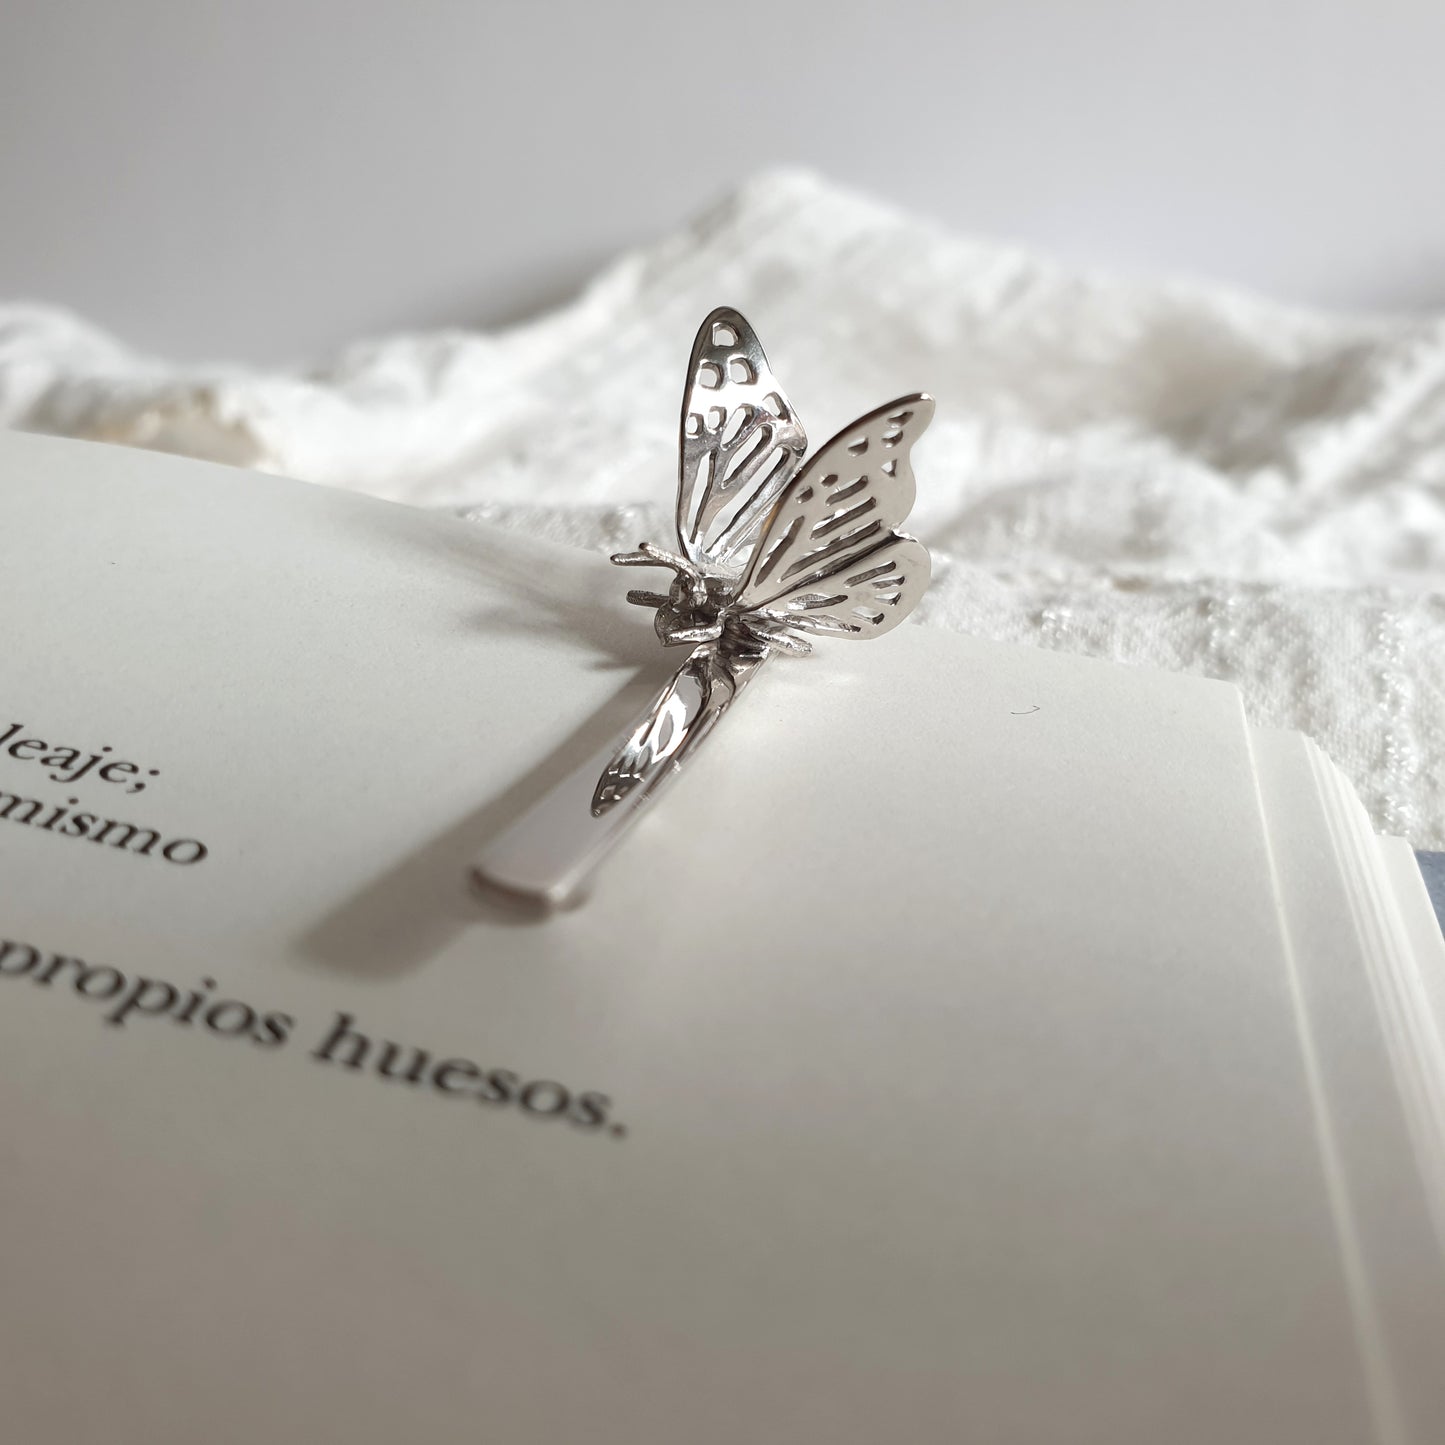 Pasador Papillon sujetando la hoja de un libro.